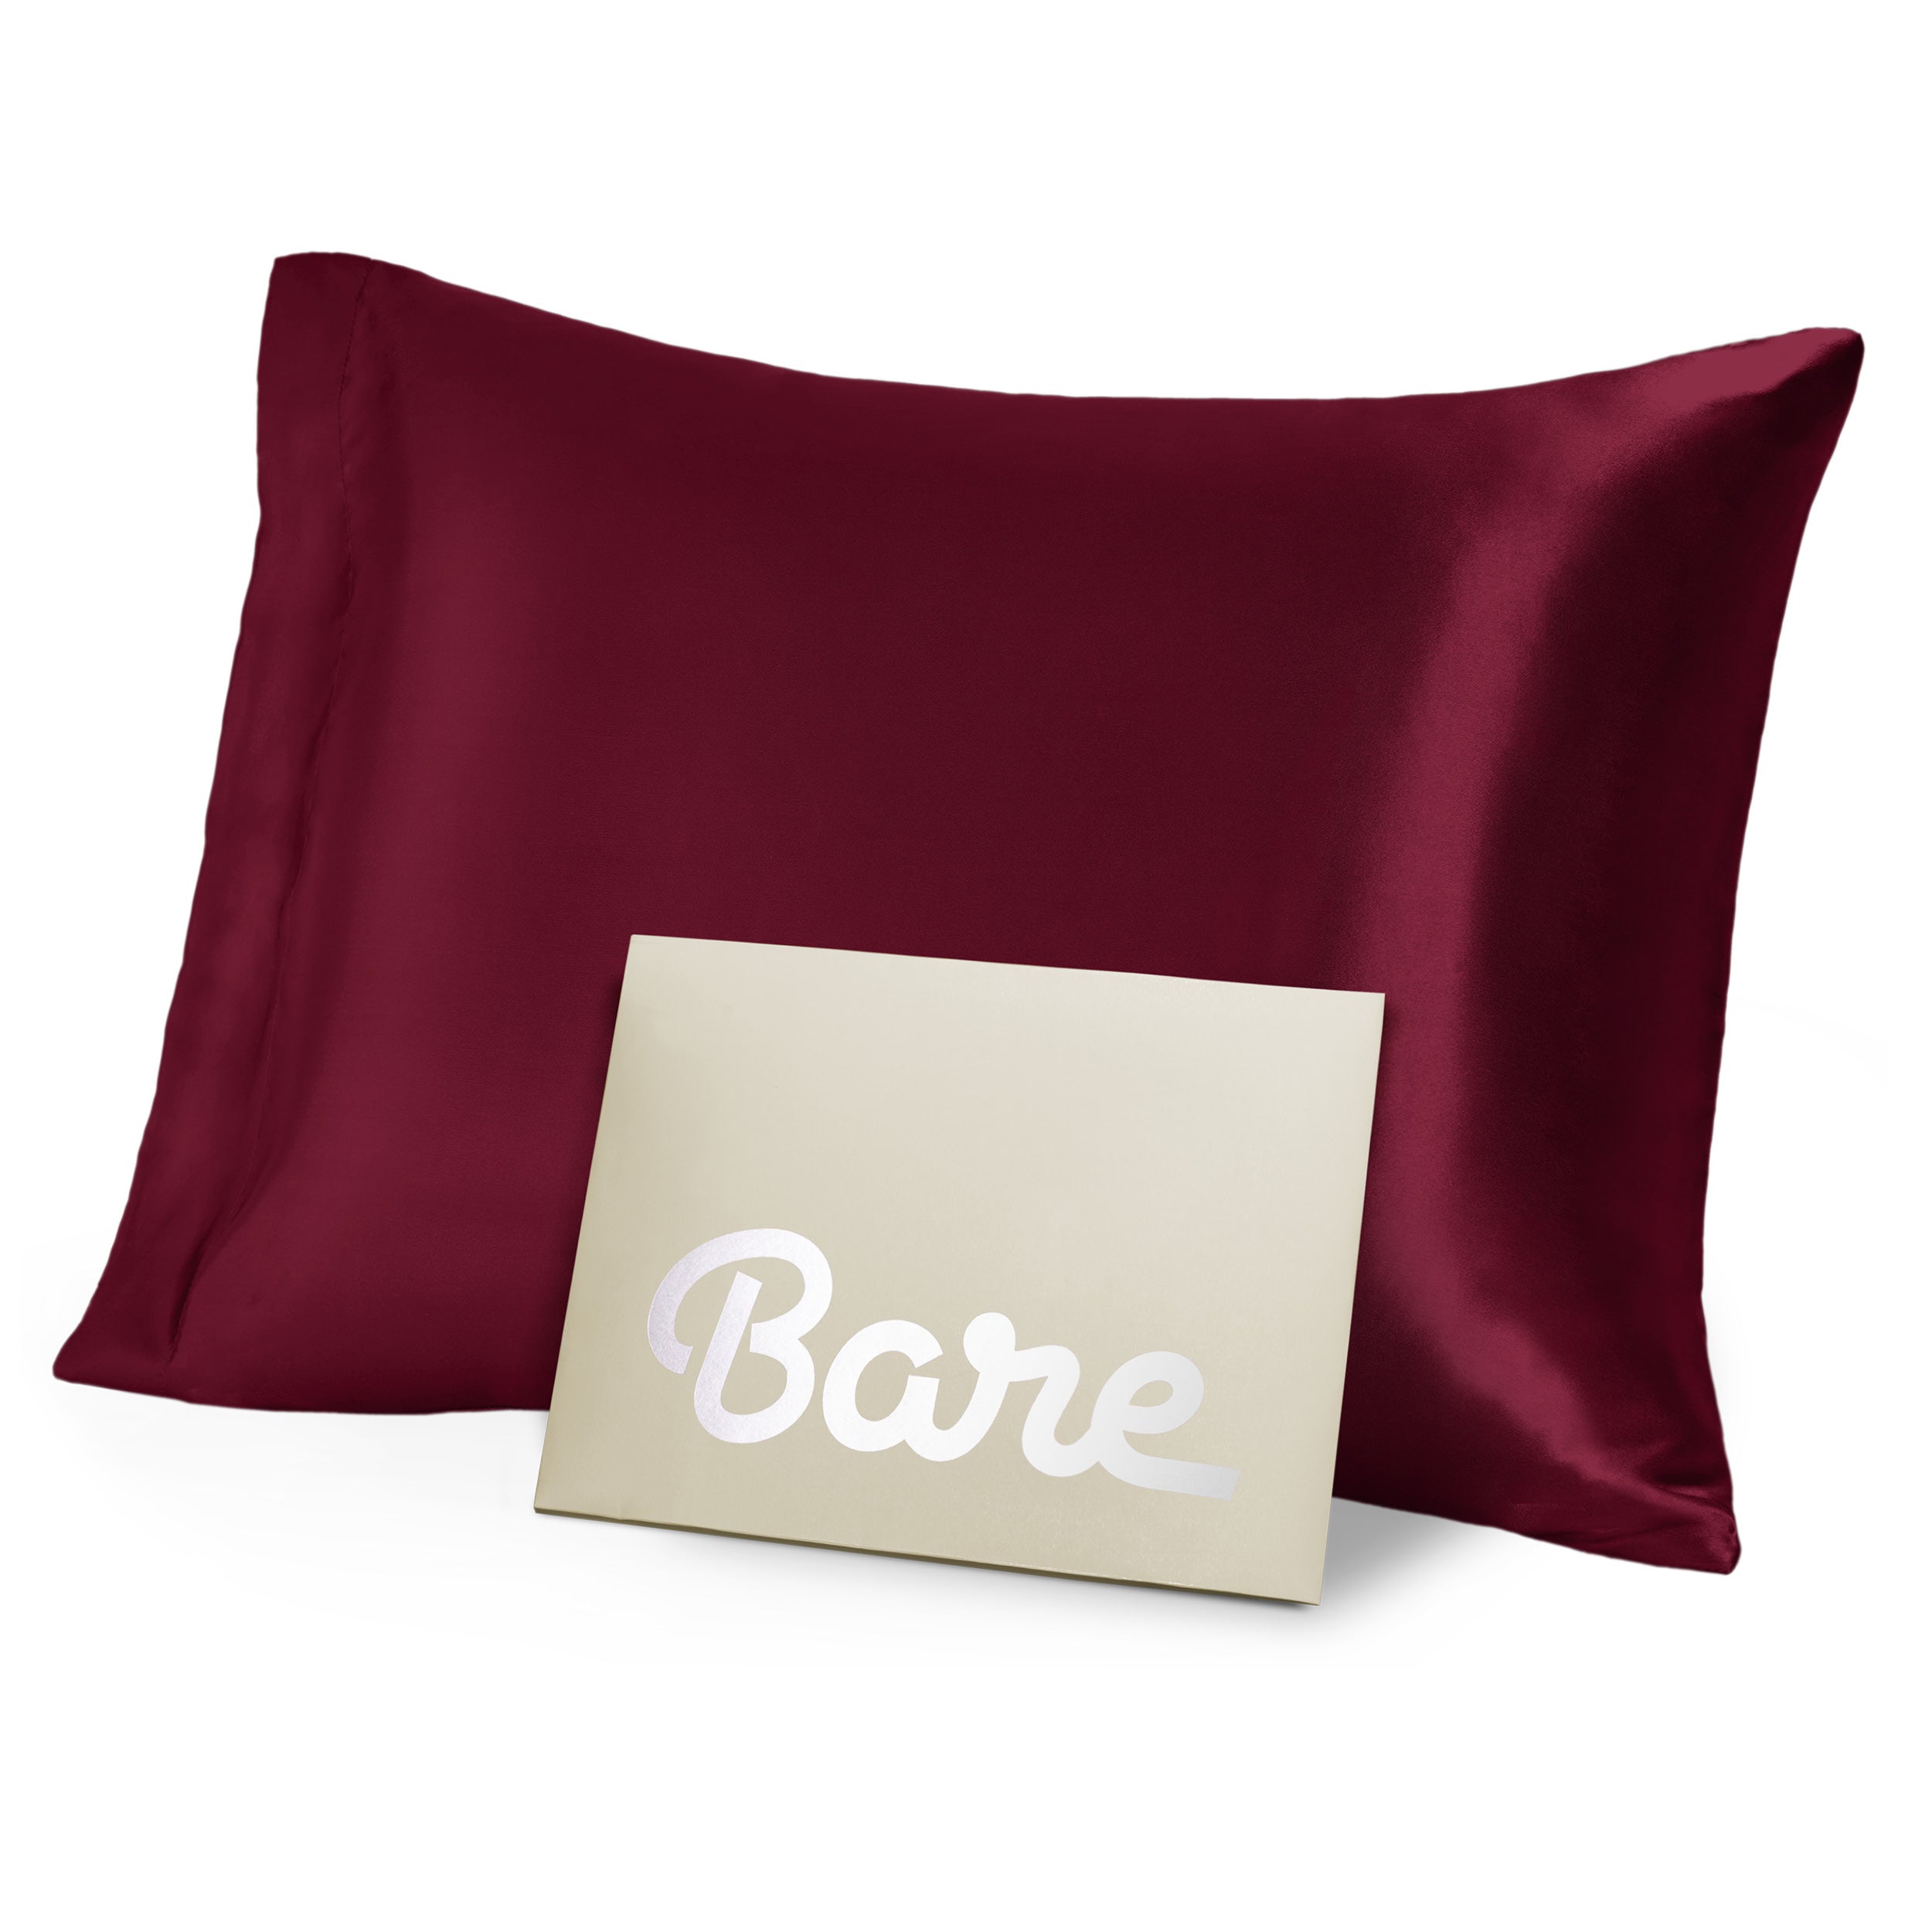 A red mulberry silk pillowcase on a pillow